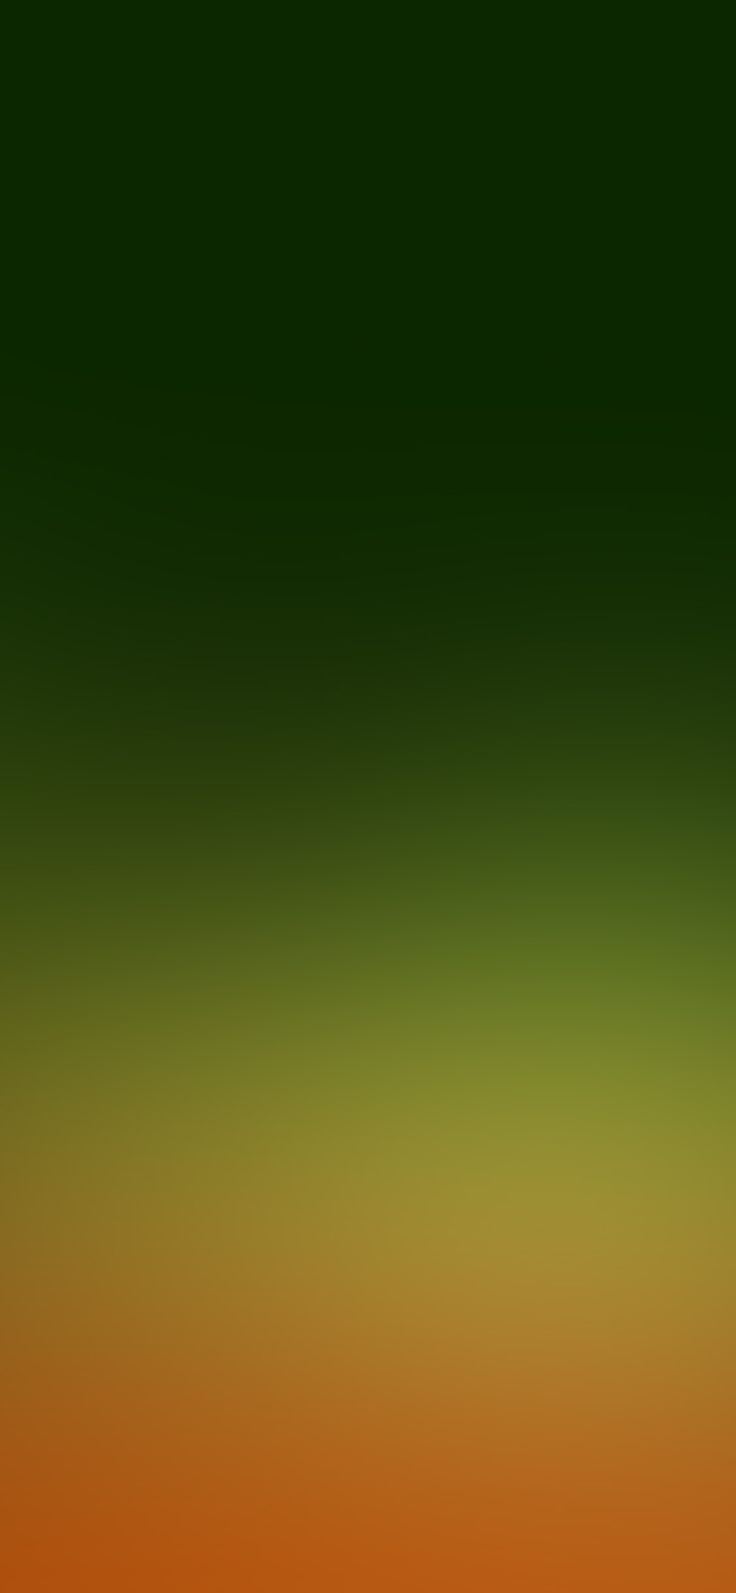 Green Background Iphone X - HD Wallpaper 